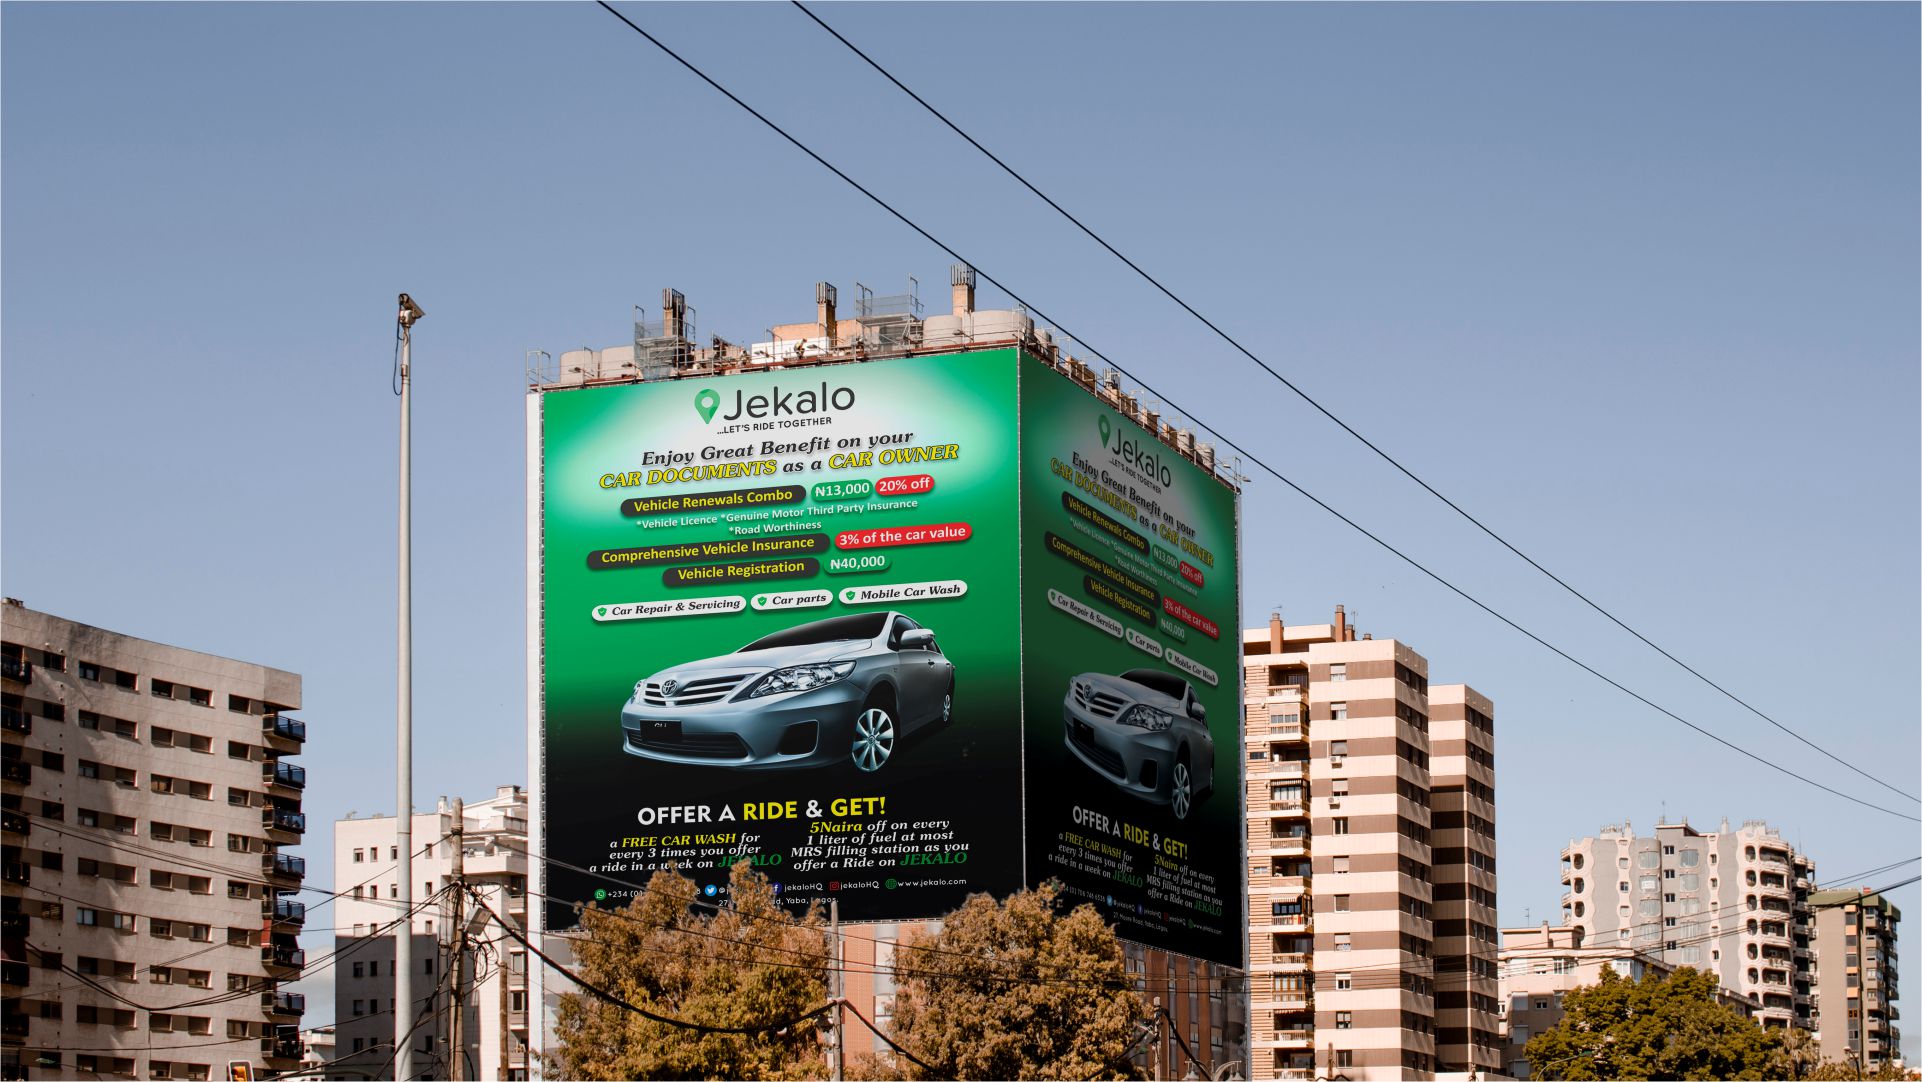 Jekalo Billboard Poster Branding Adverts in Lagos Nigeria